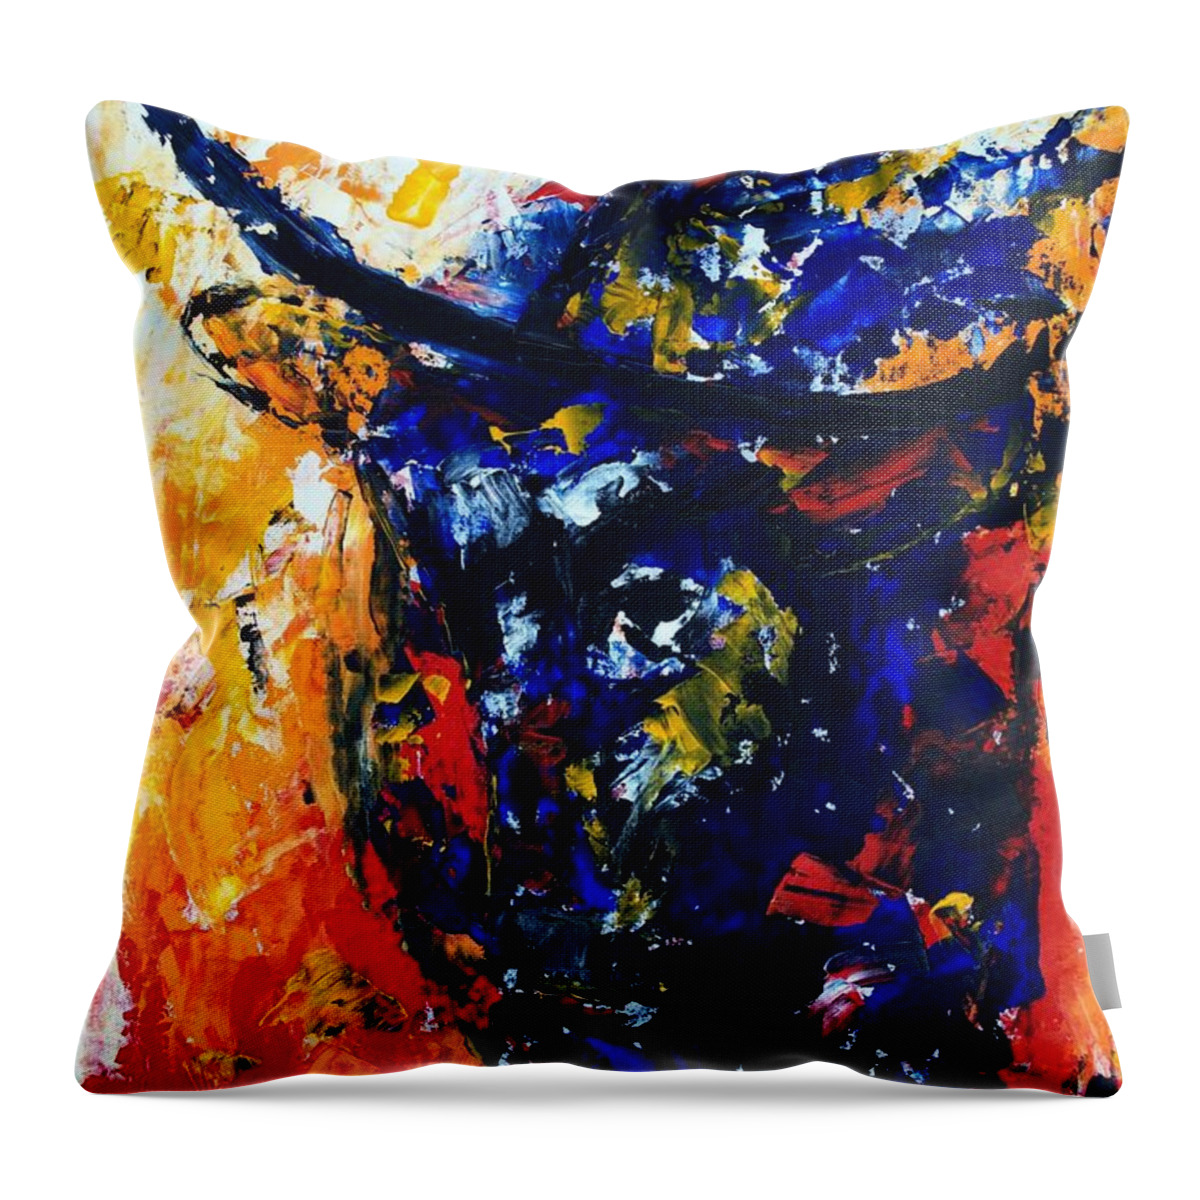 Bull Throw Pillow featuring the painting Bull by Lidija Ivanek - SiLa